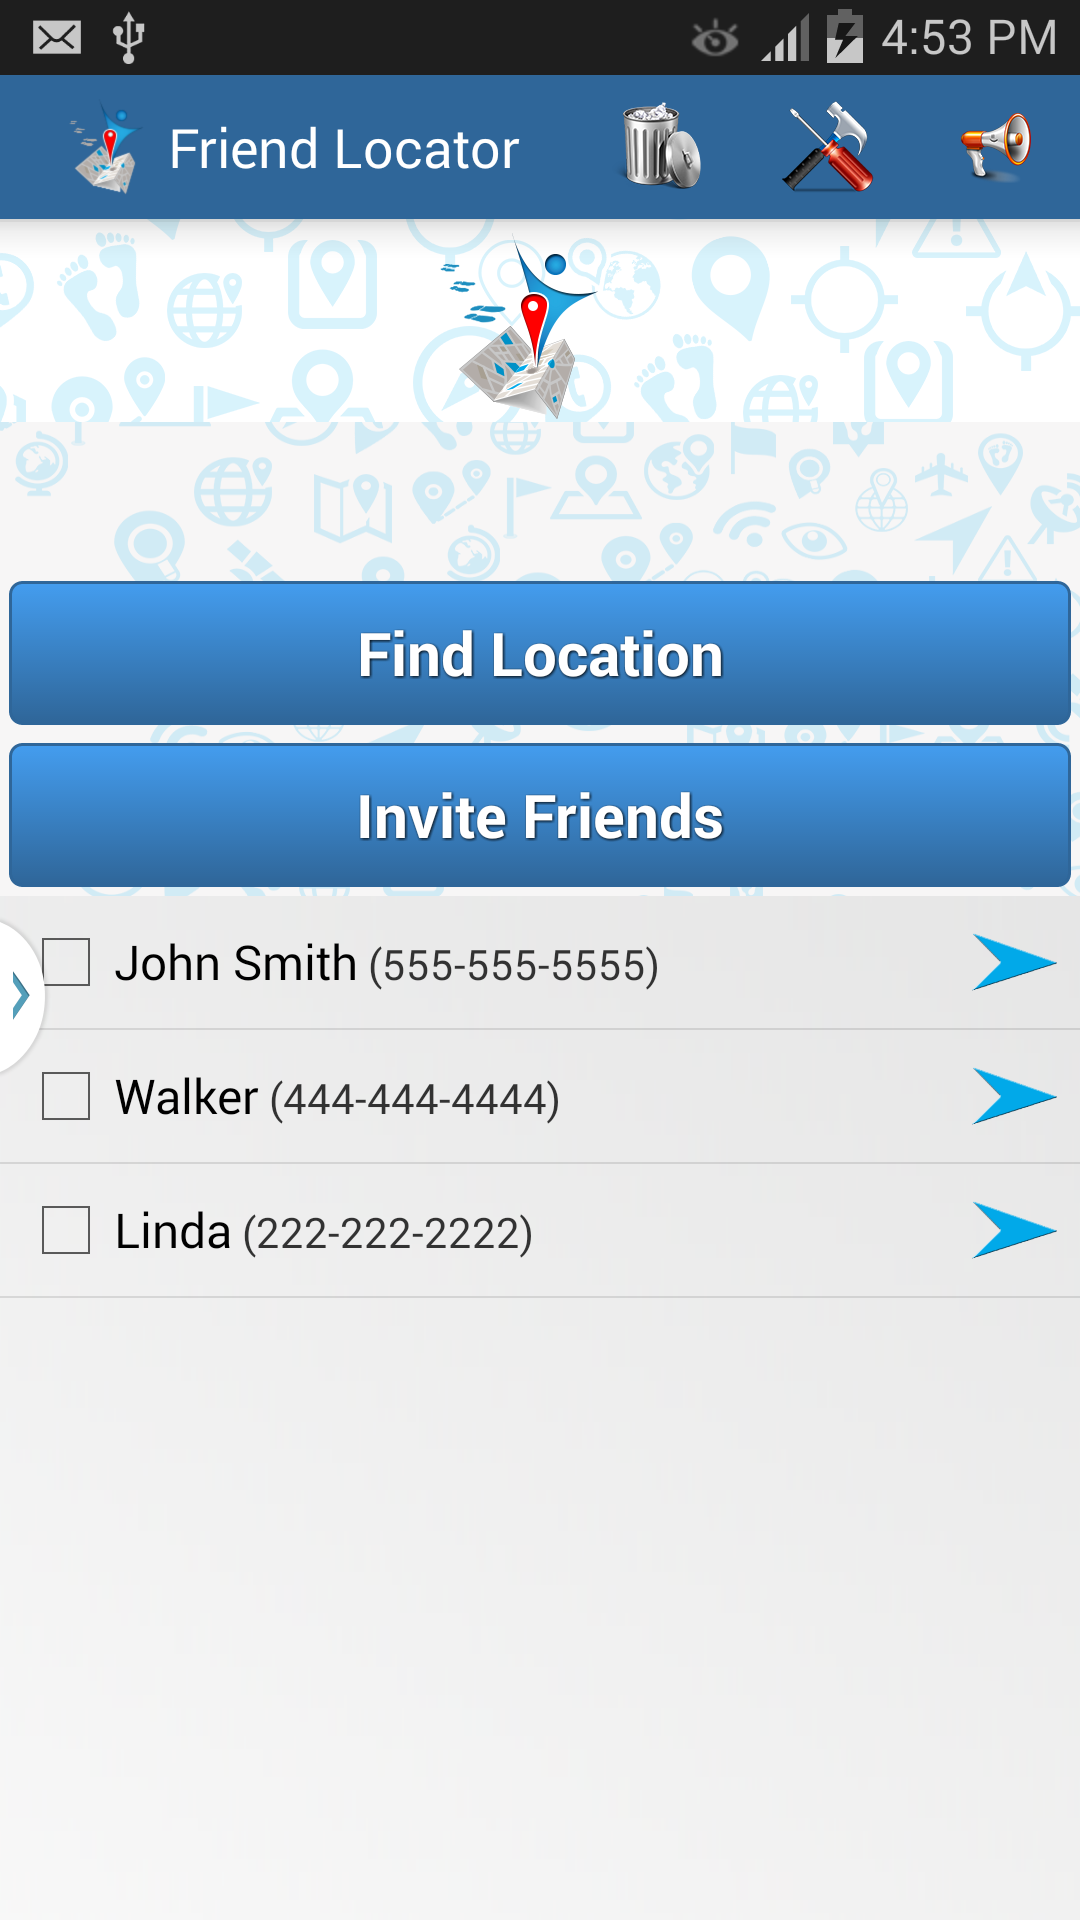 Home screen of friend locator app